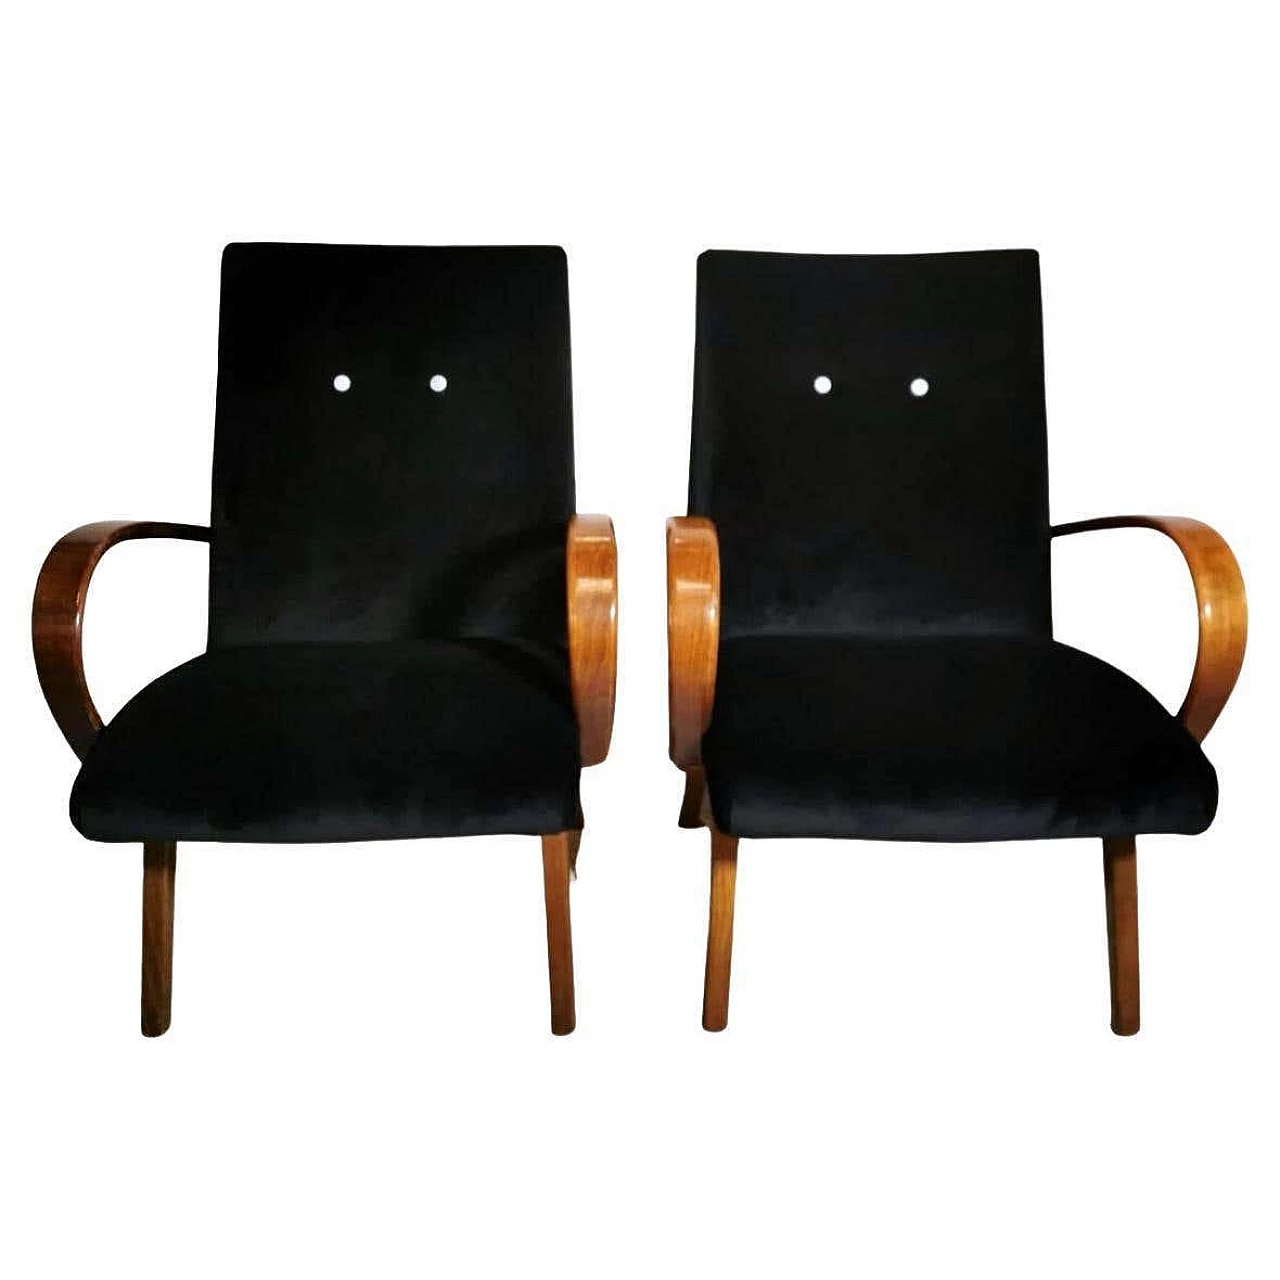 Pair of Banannachair armchairs attributed to Jindrich Halabala, 1930s 18